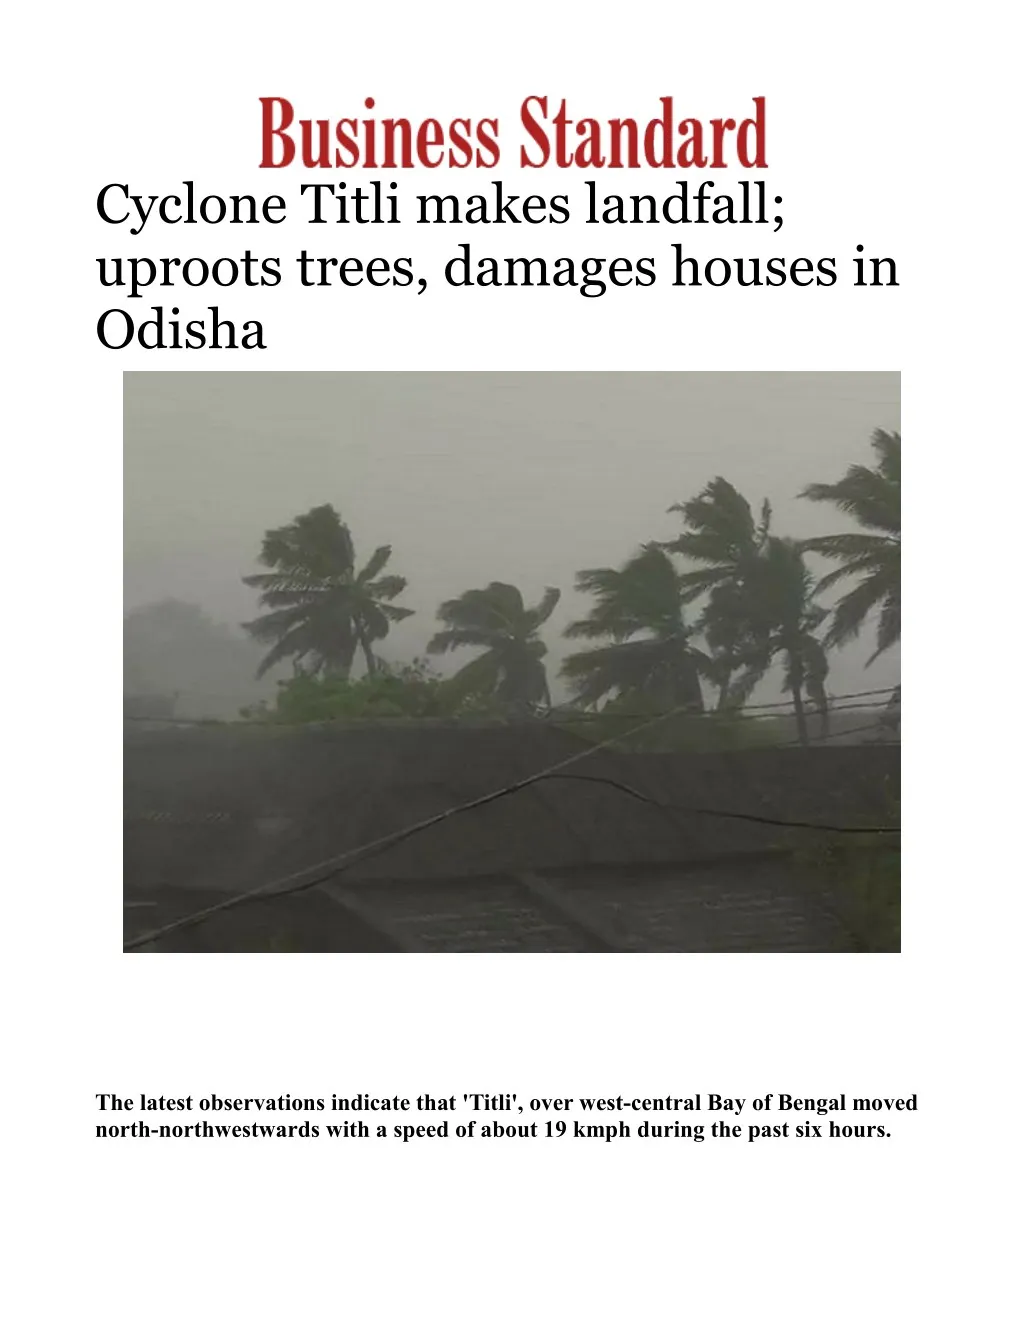 cyclone titli makes landfall uproots trees